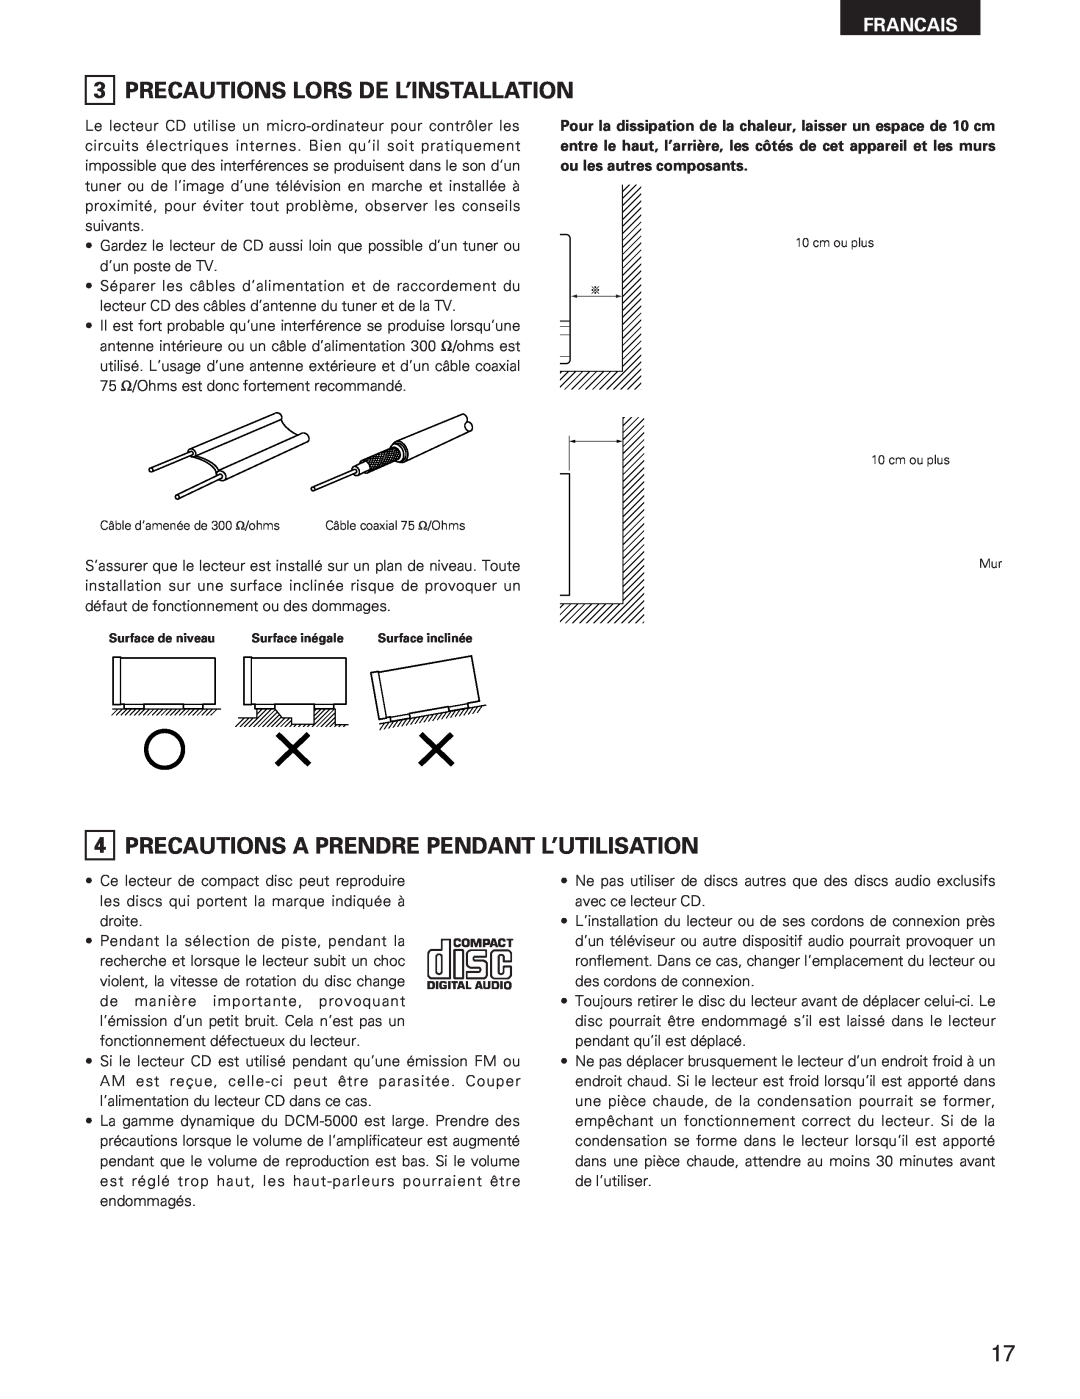 Denon DCM-5001 manual Precautions Lors De L’Installation, Precautions A Prendre Pendant L’Utilisation, Francais 